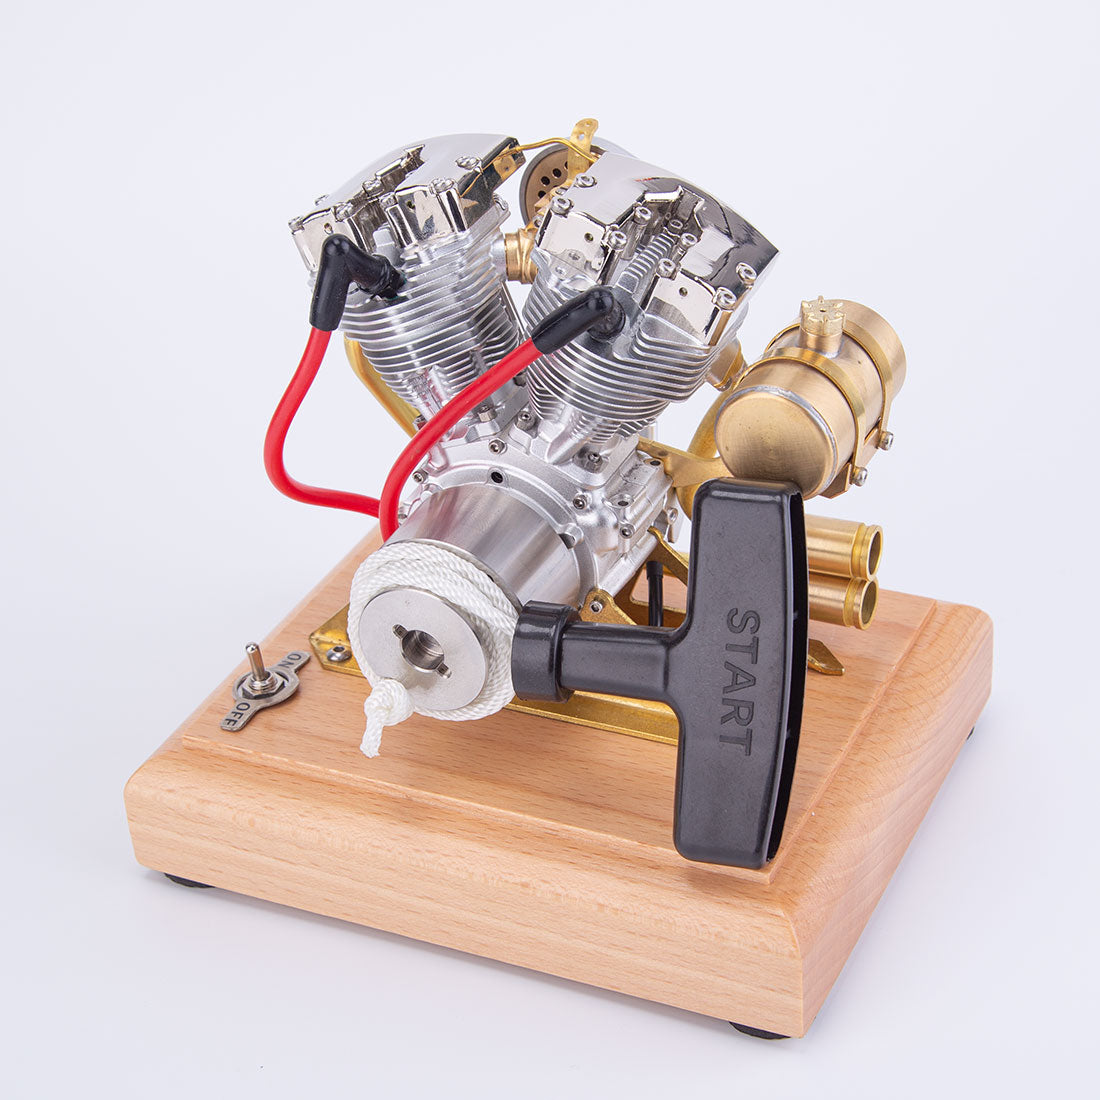 R31 V2 engine model gas engine